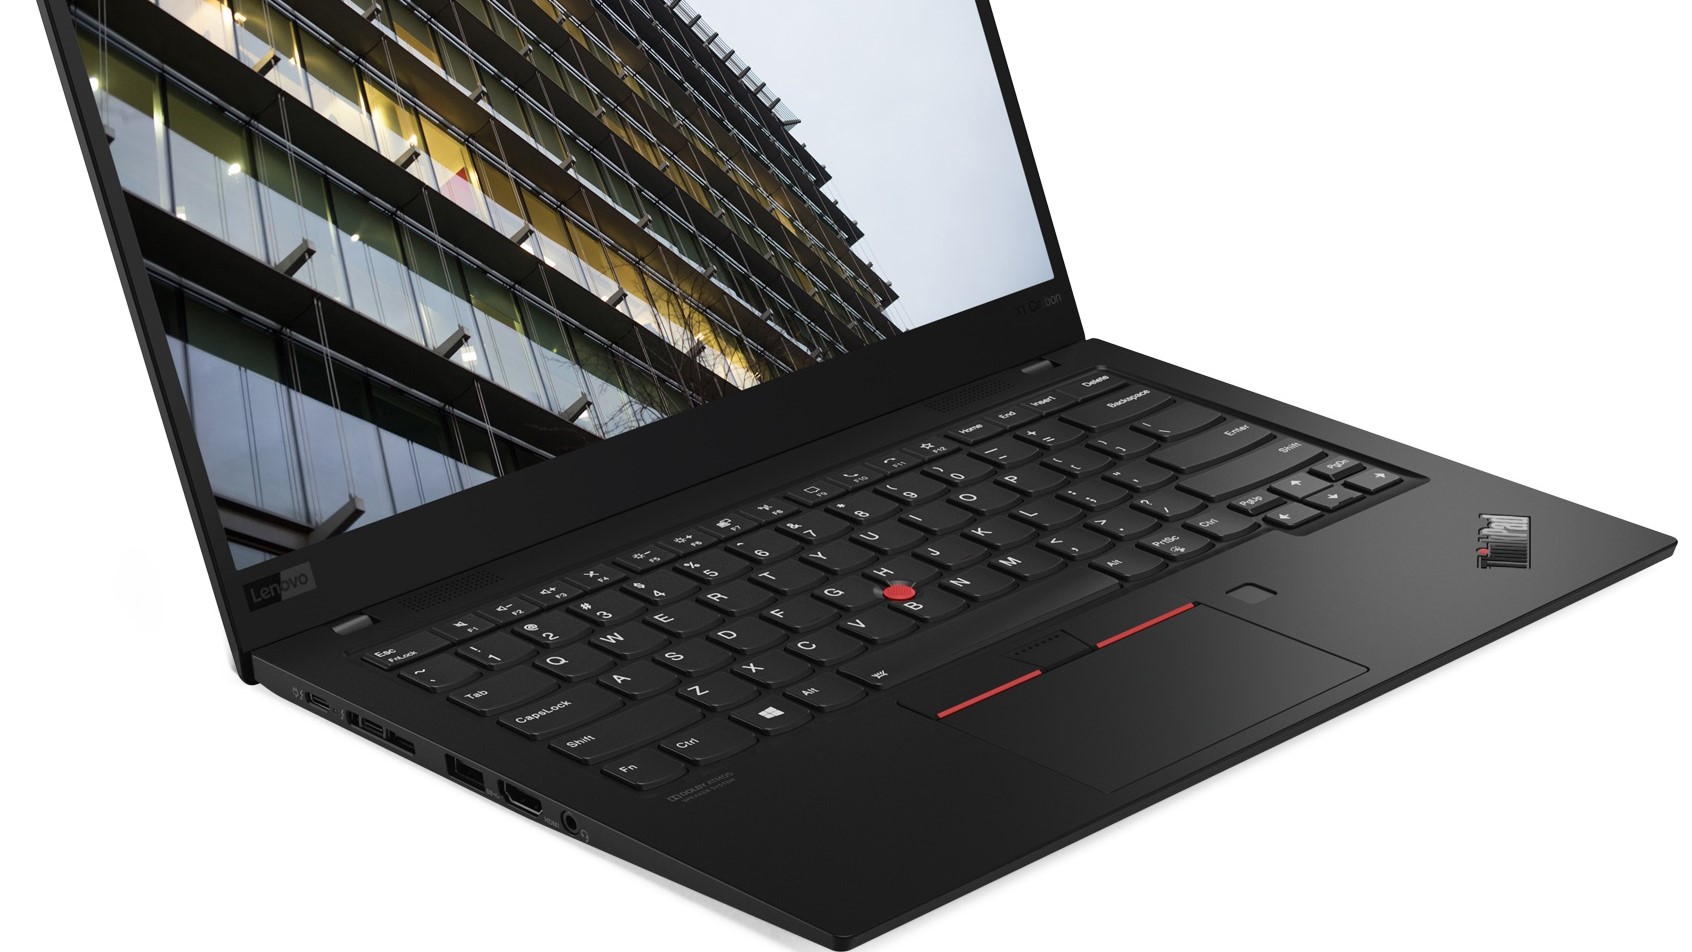 Comparison] Lenovo ThinkPad X1 Carbon 8th Gen (2020) vs X1 Carbon 